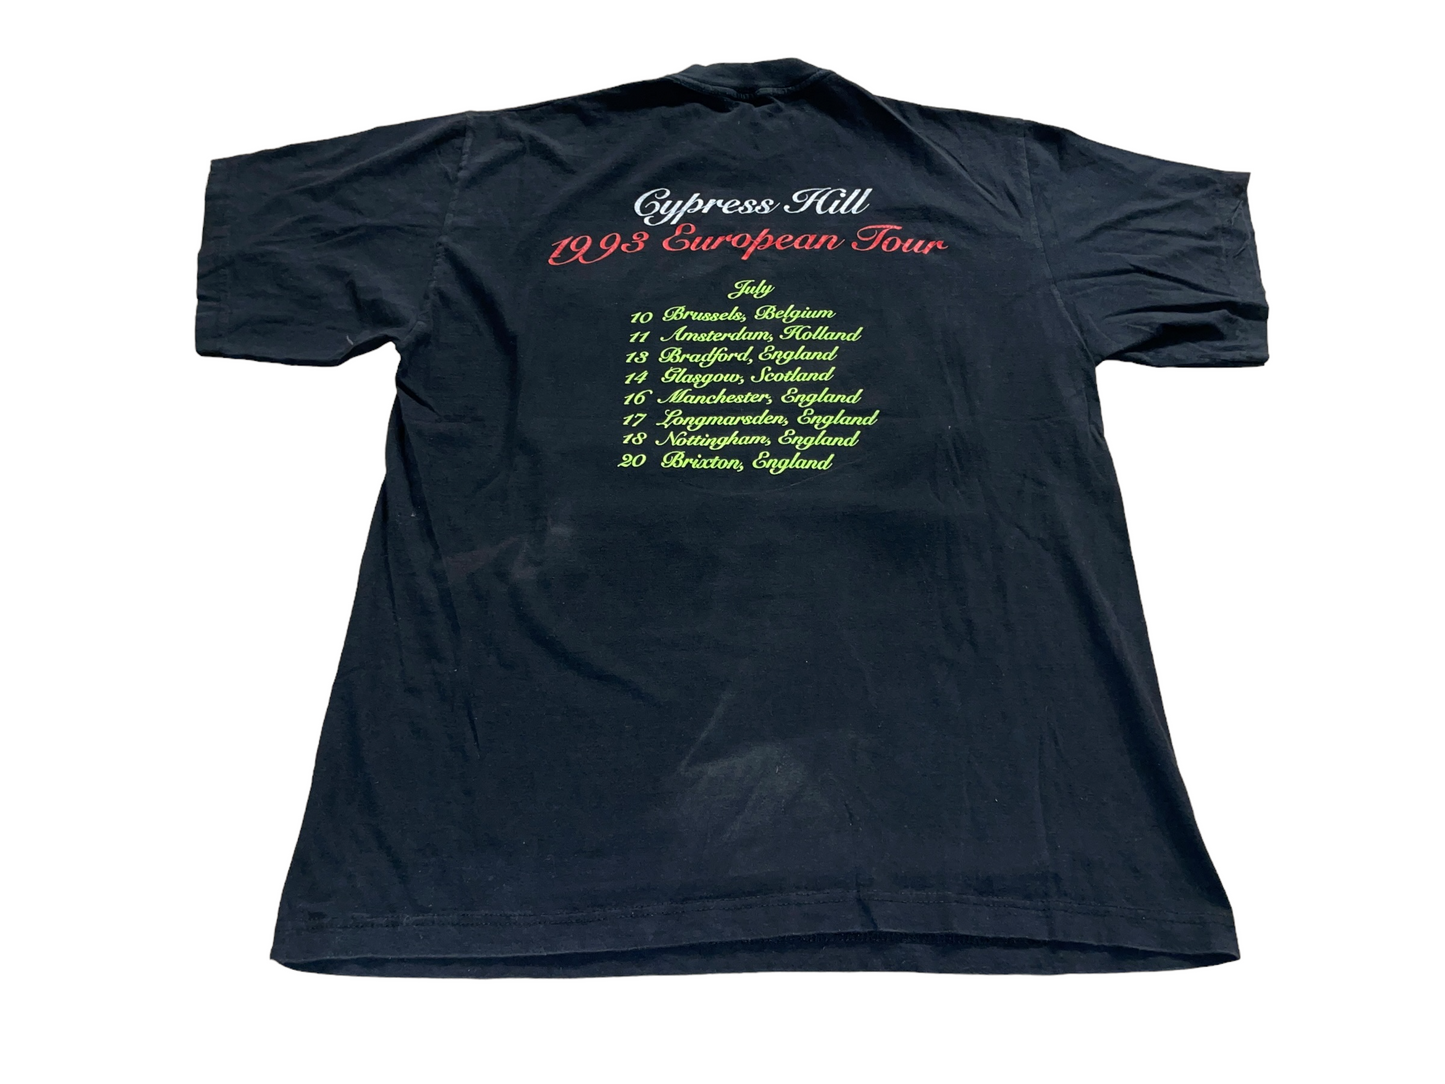 Vintage 1993 Cypress Hill T-Shirt